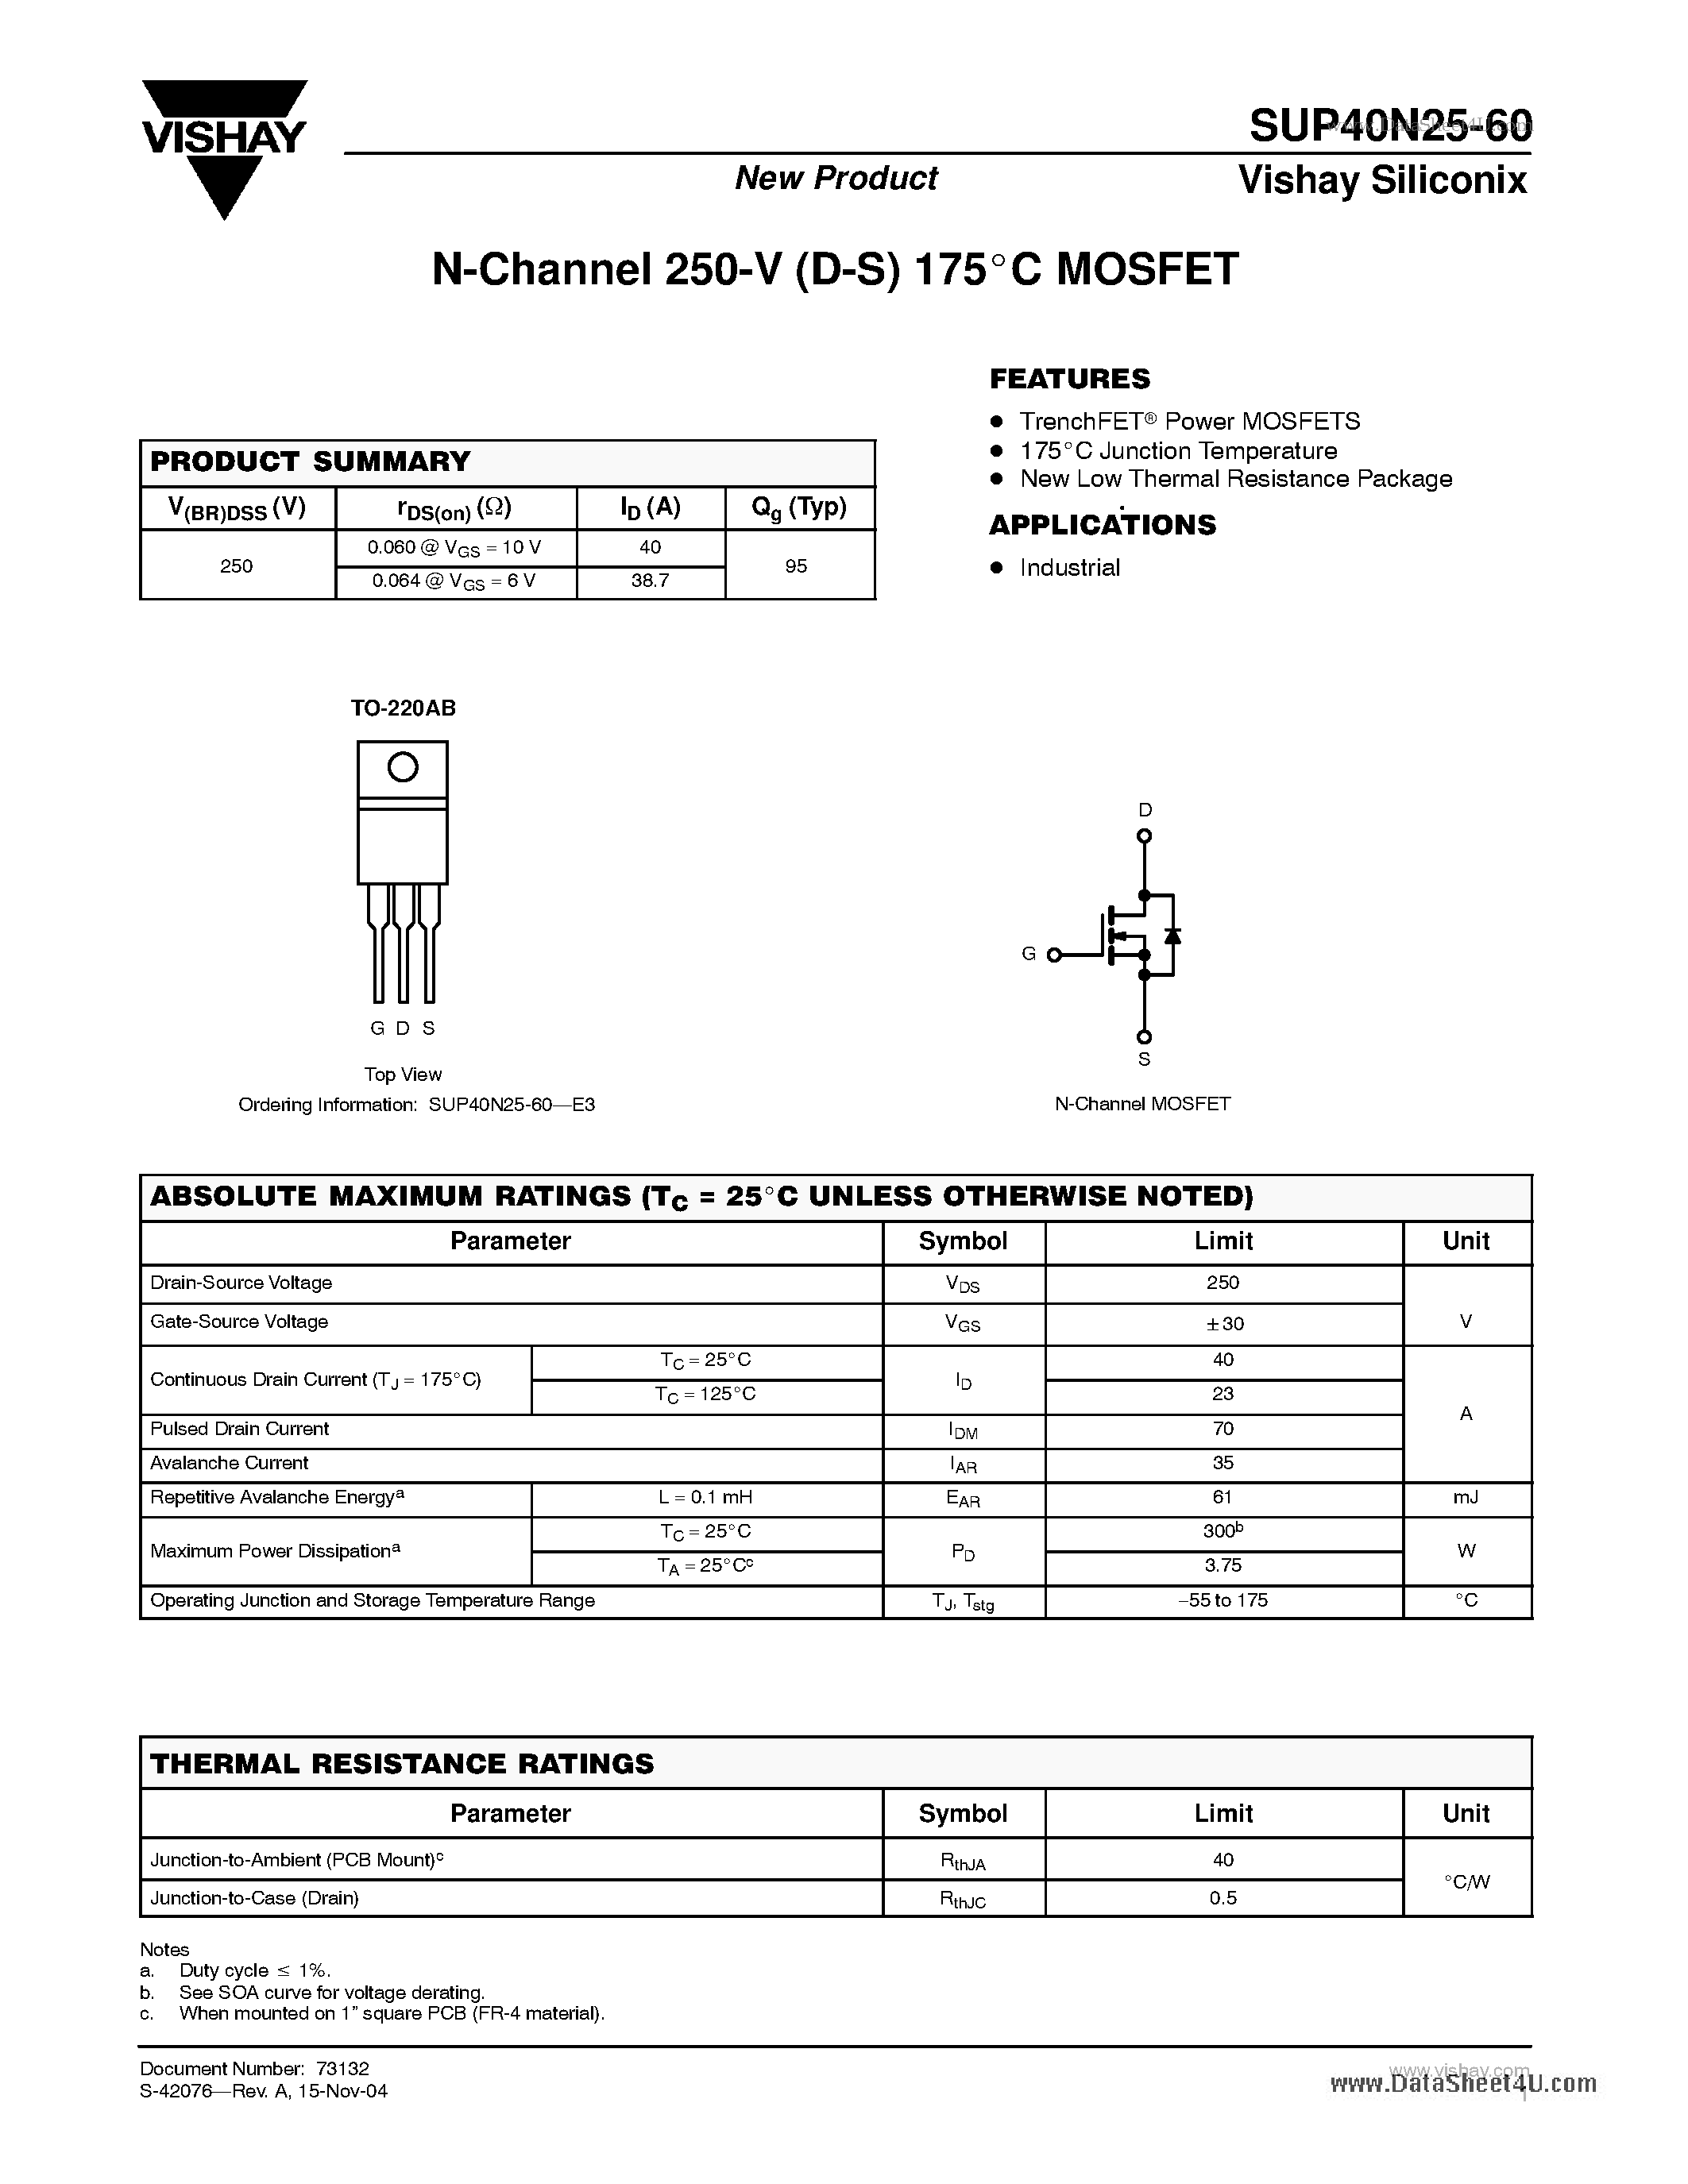 Даташит SUP40N25-60 - N-Channel 250-V (D-S) 175C MOSFET страница 1